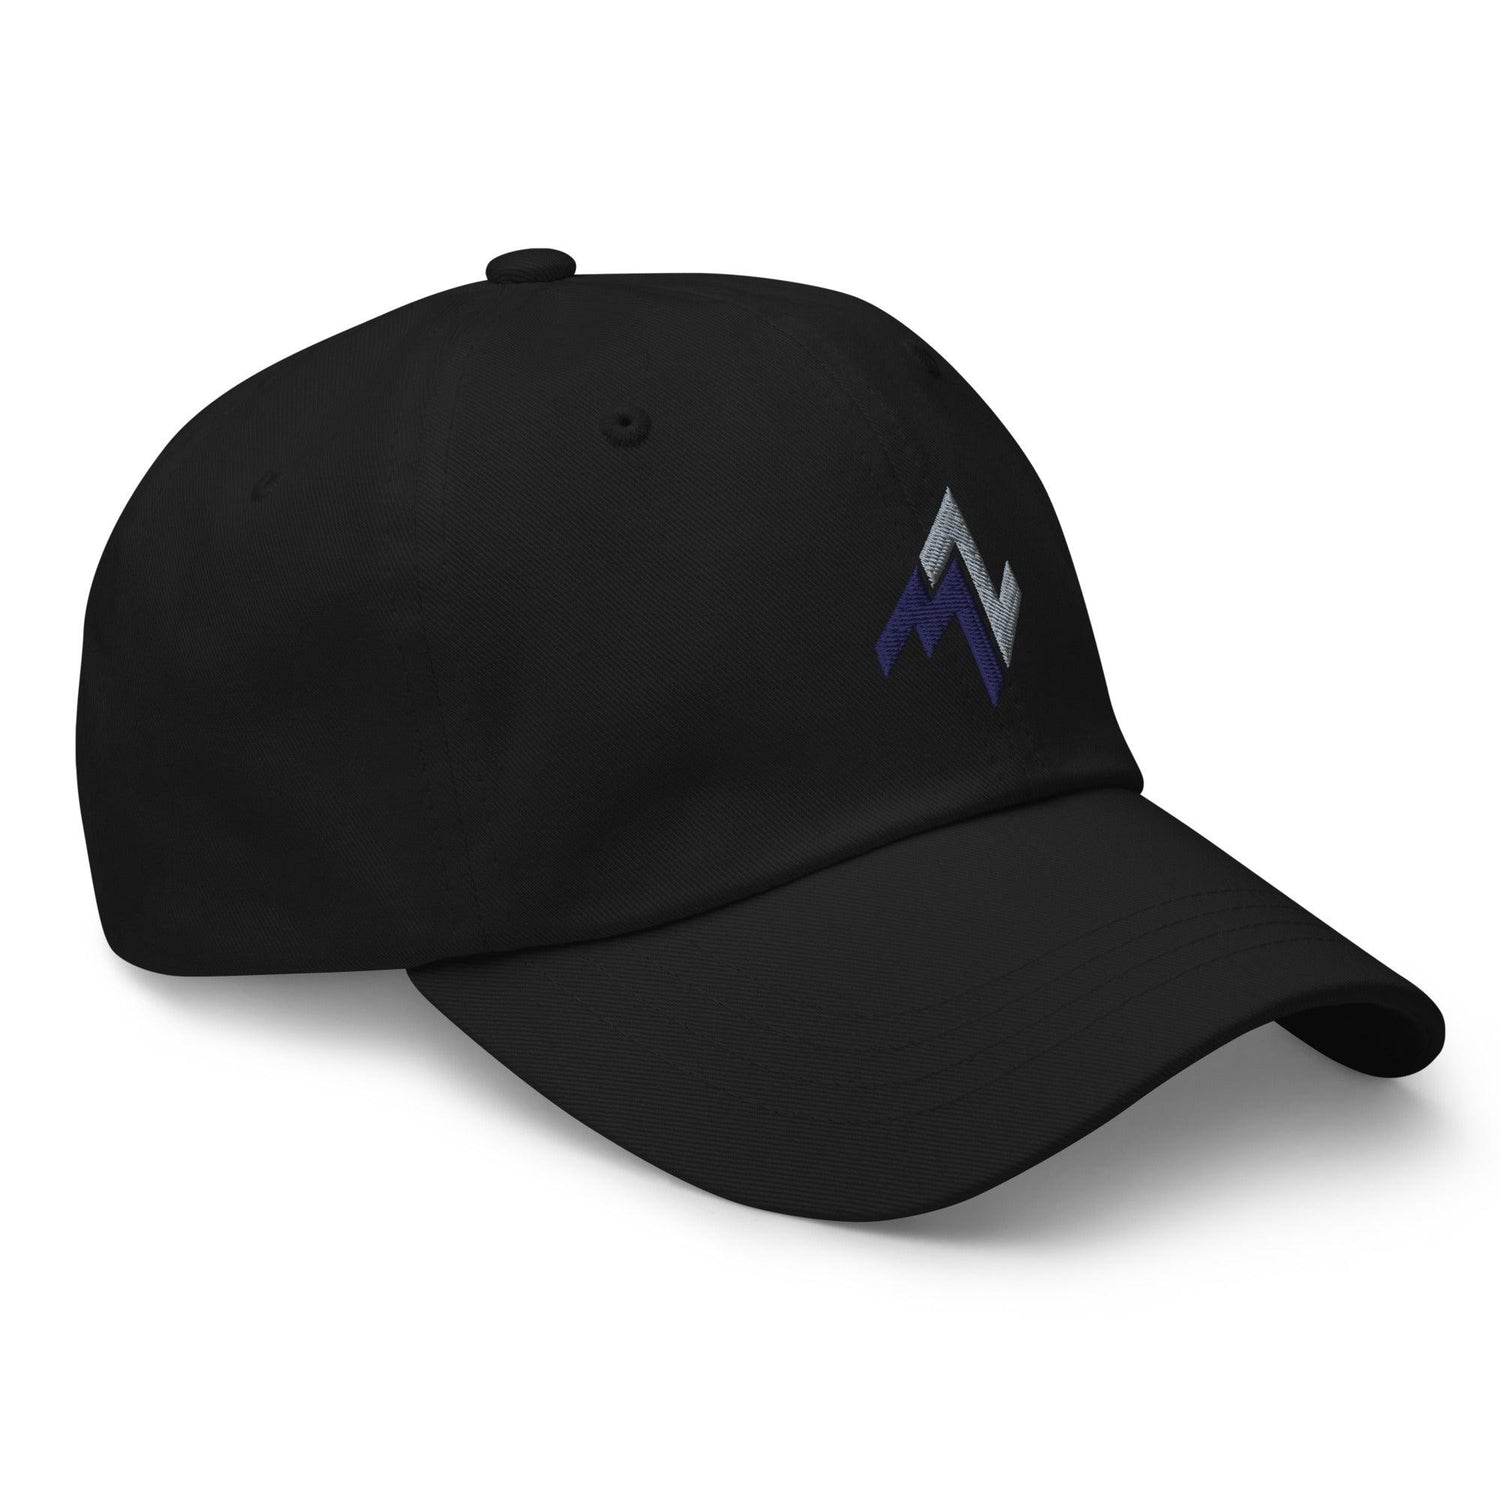 Mike Zunino "Essential" hat - Fan Arch